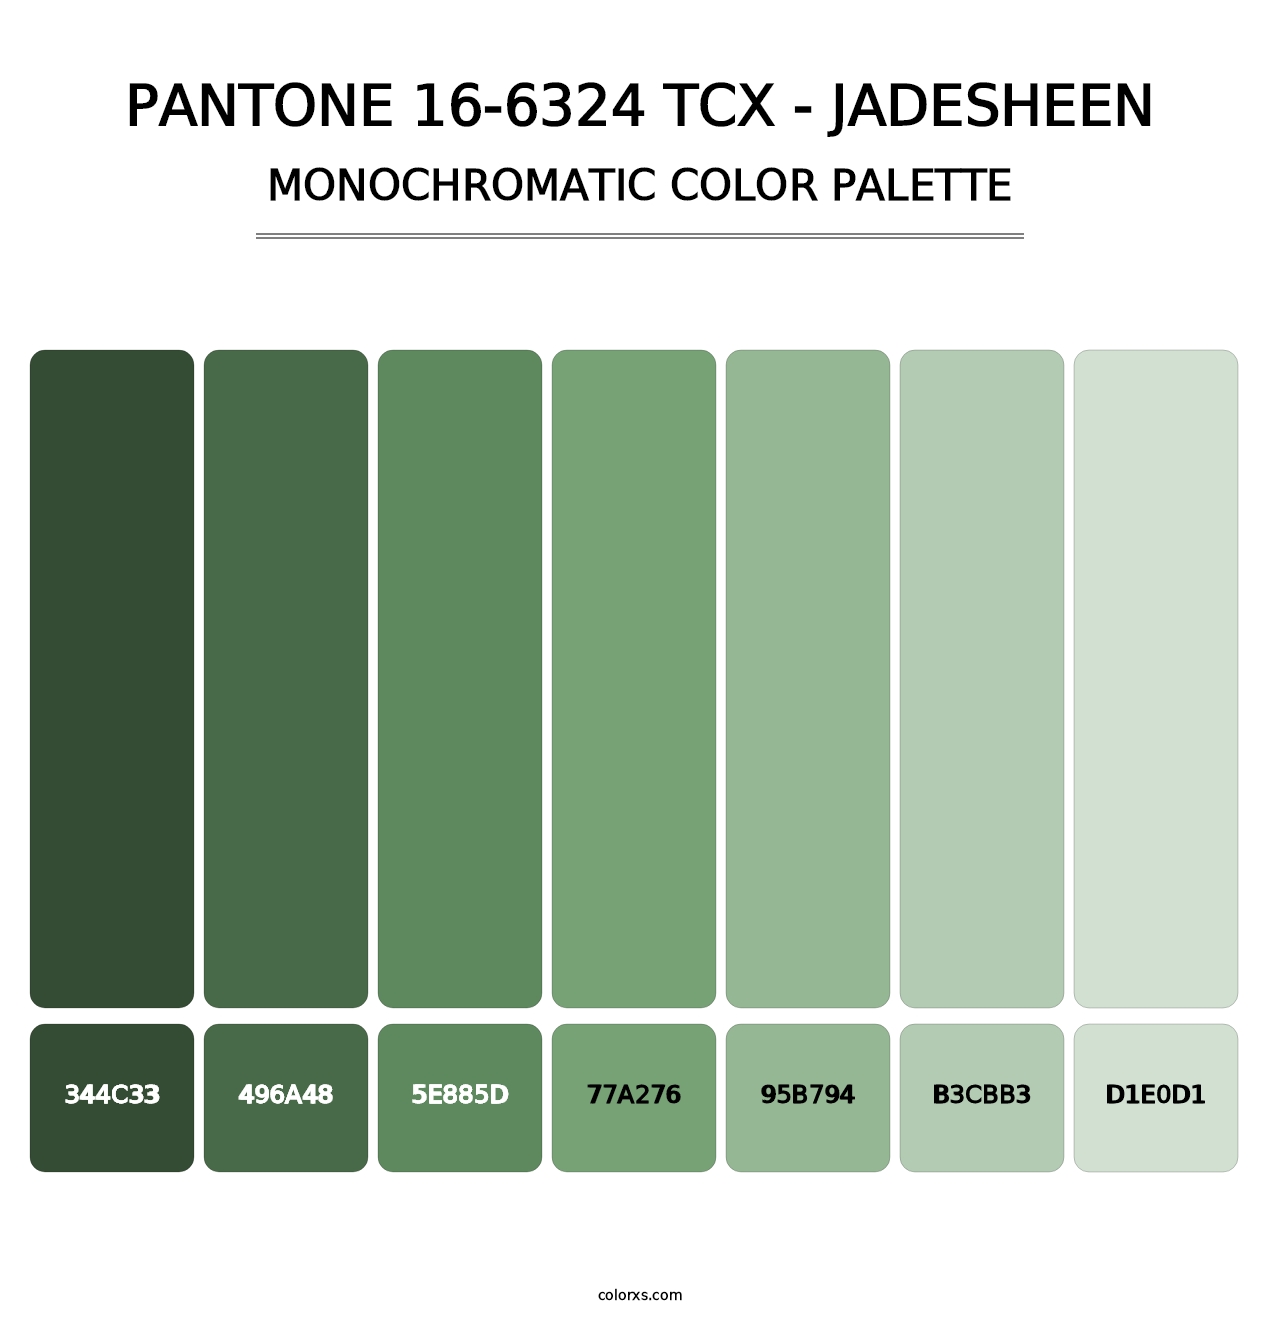 PANTONE 16-6324 TCX - Jadesheen - Monochromatic Color Palette